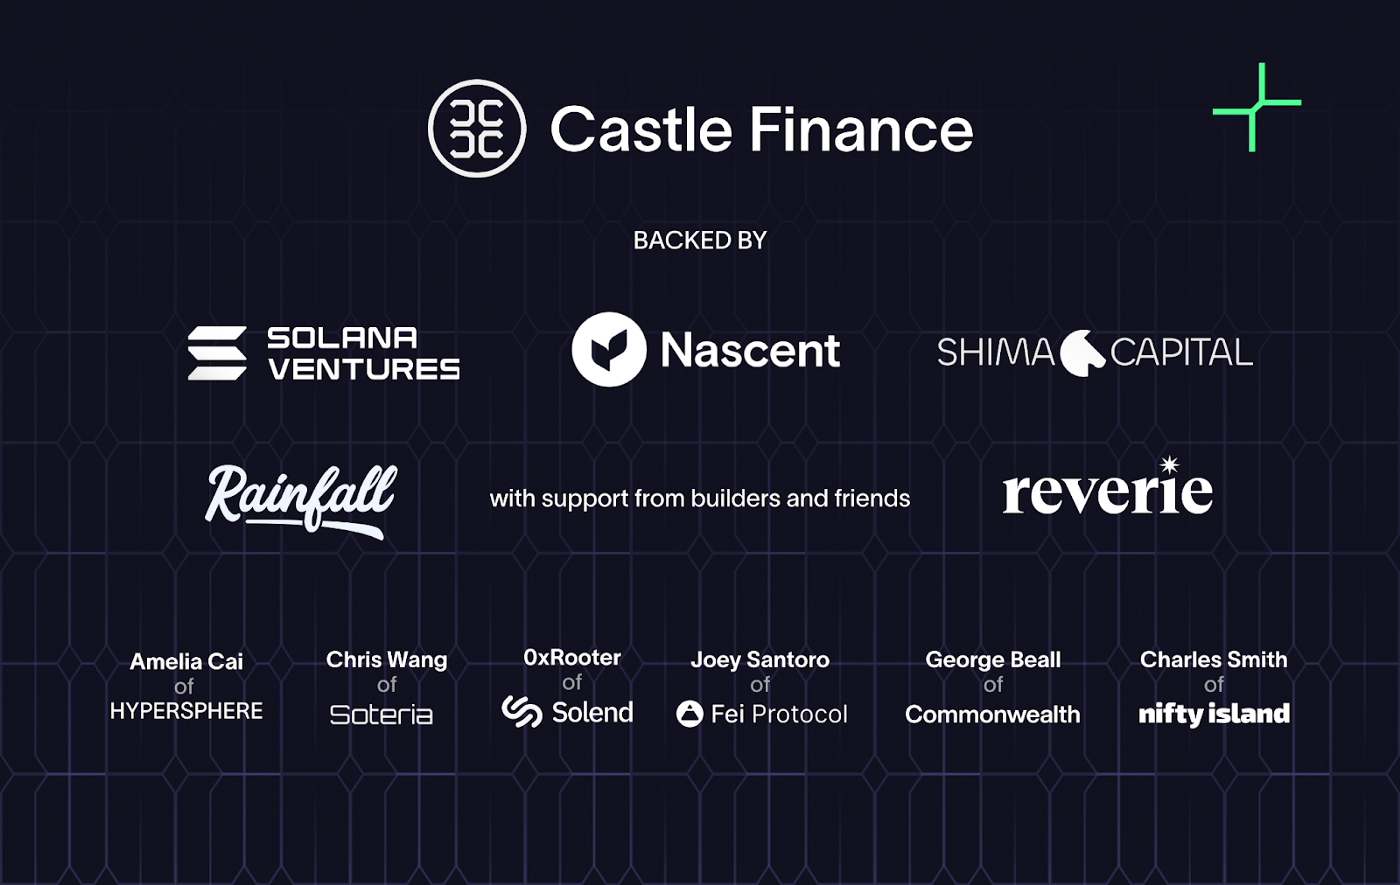 Castle Finance investors